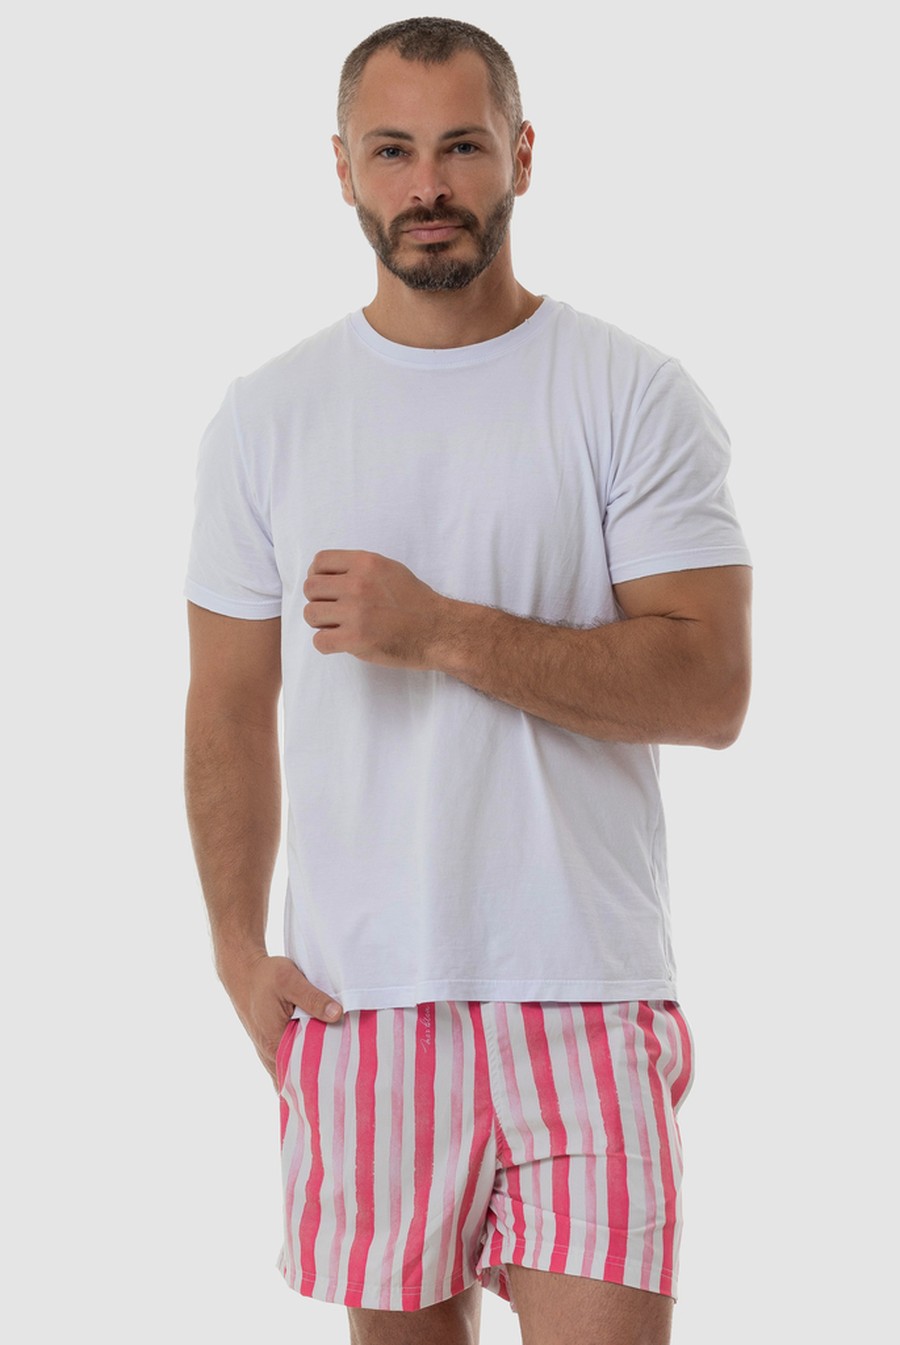 shorts masculino listrado rosa 16667 mer bleu